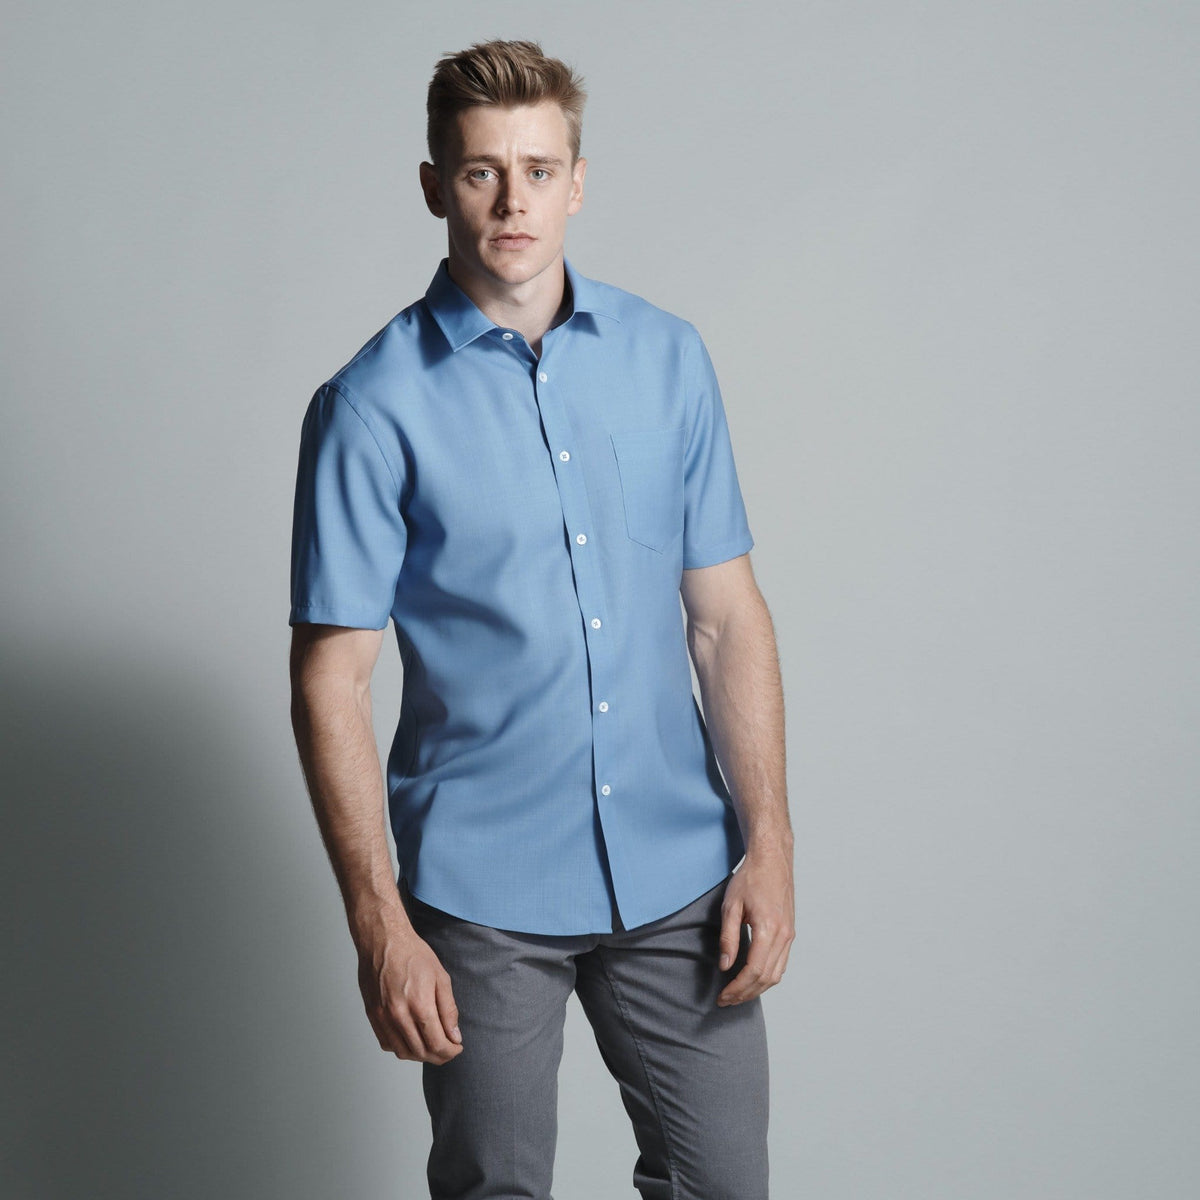 100% Merino Wool Short Sleeve | A Classy T-Shirt Alternative